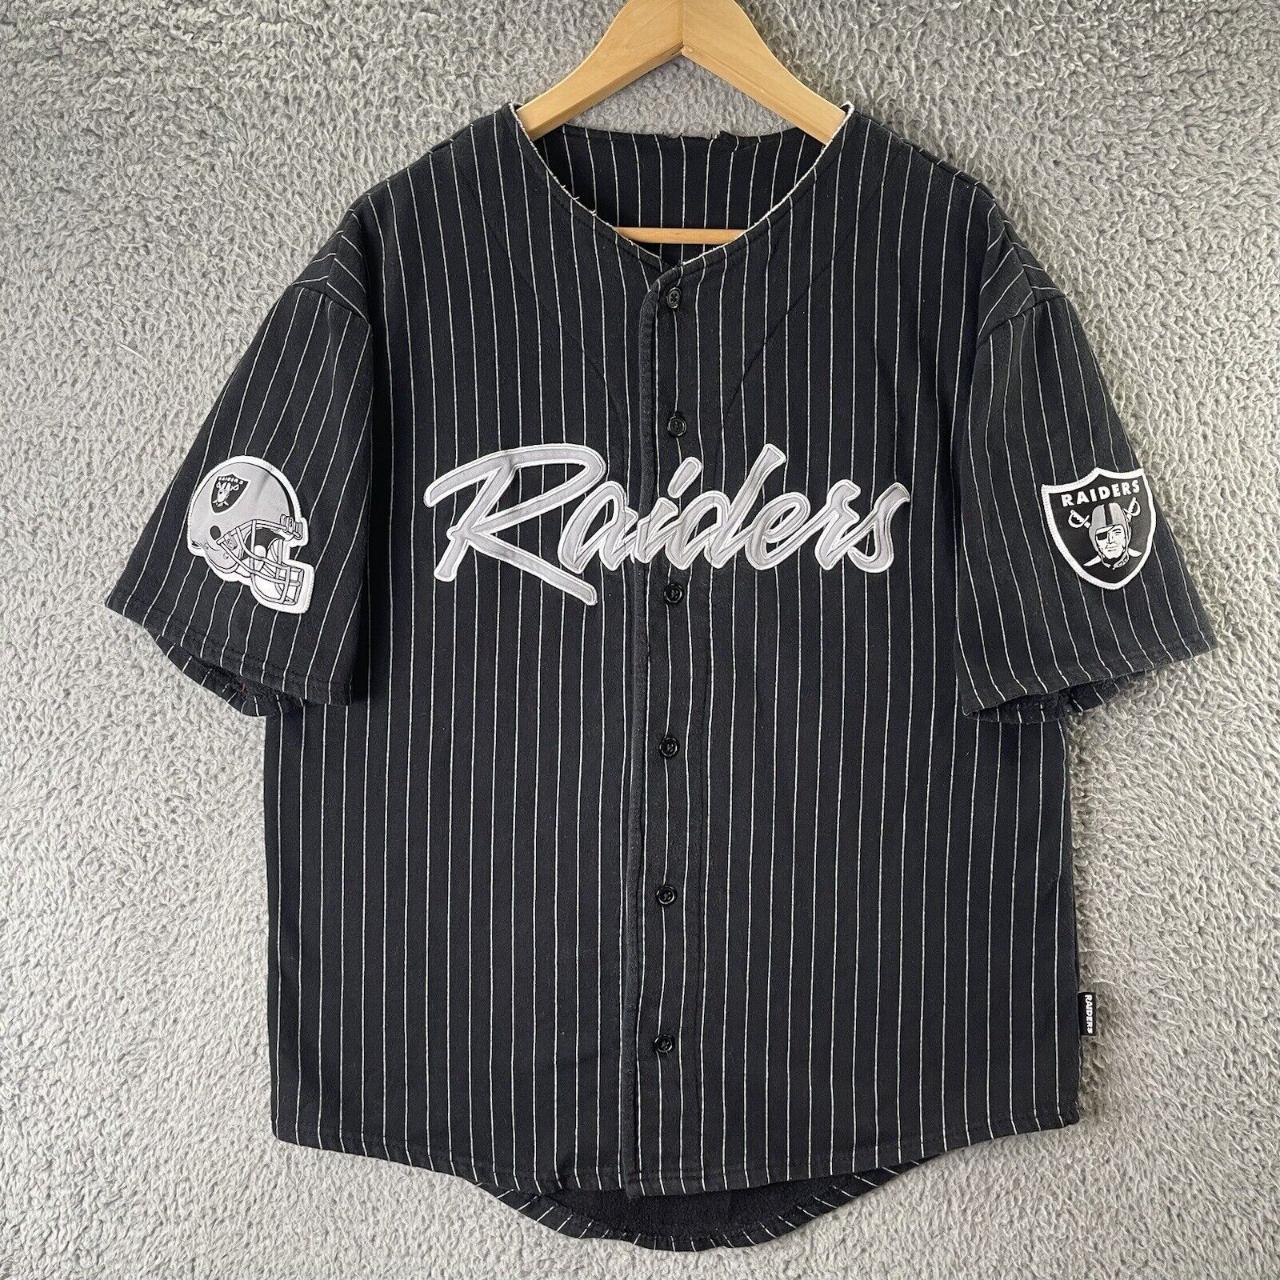 Vintage Oakland Raiders Pinstripe Baseball Jersey... - Depop